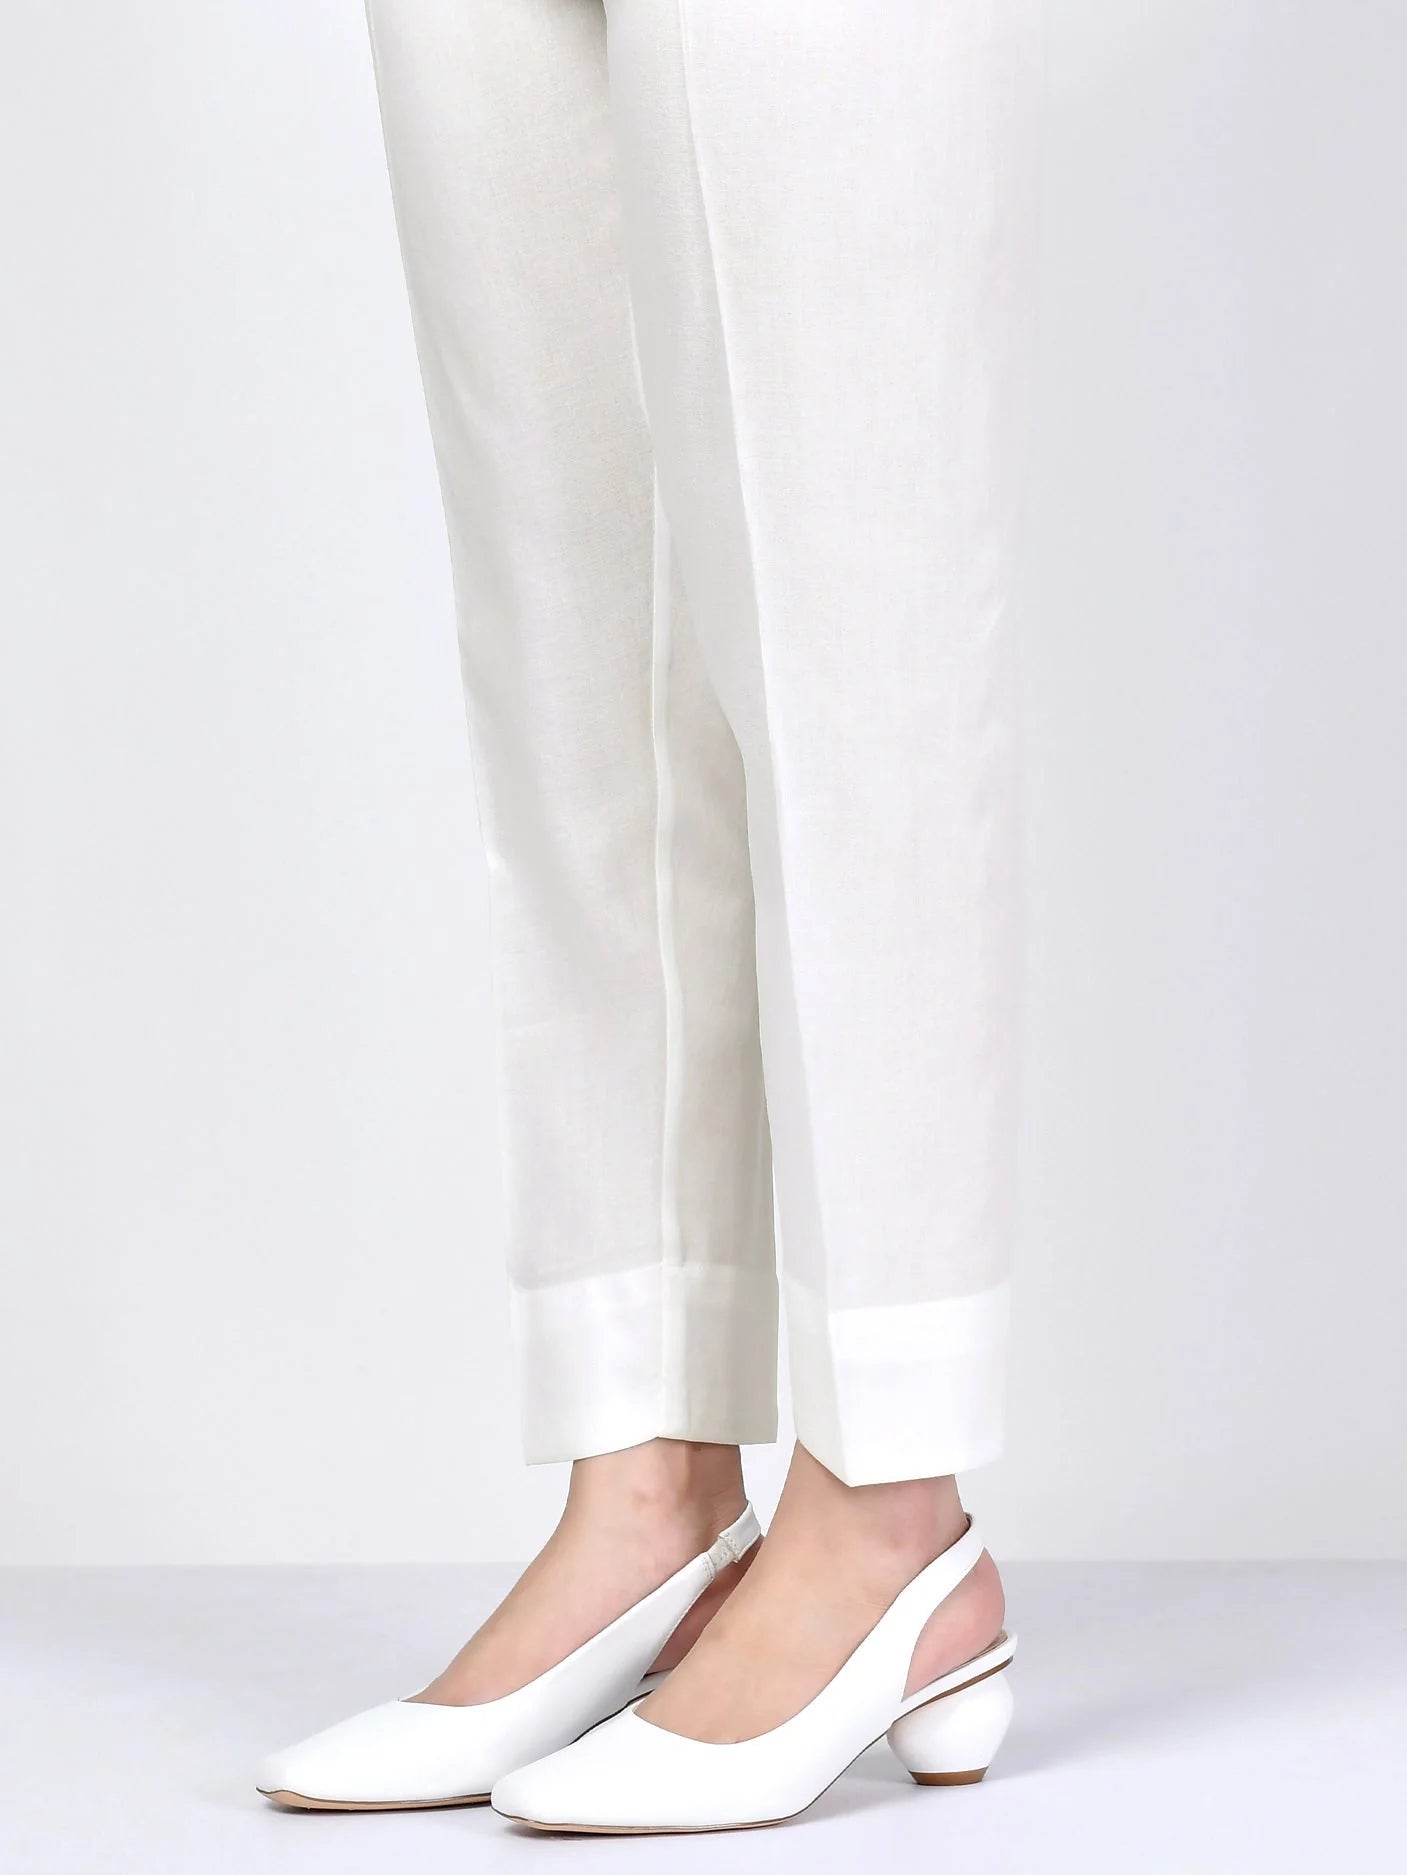 plain white trouser for ladies in pakistan